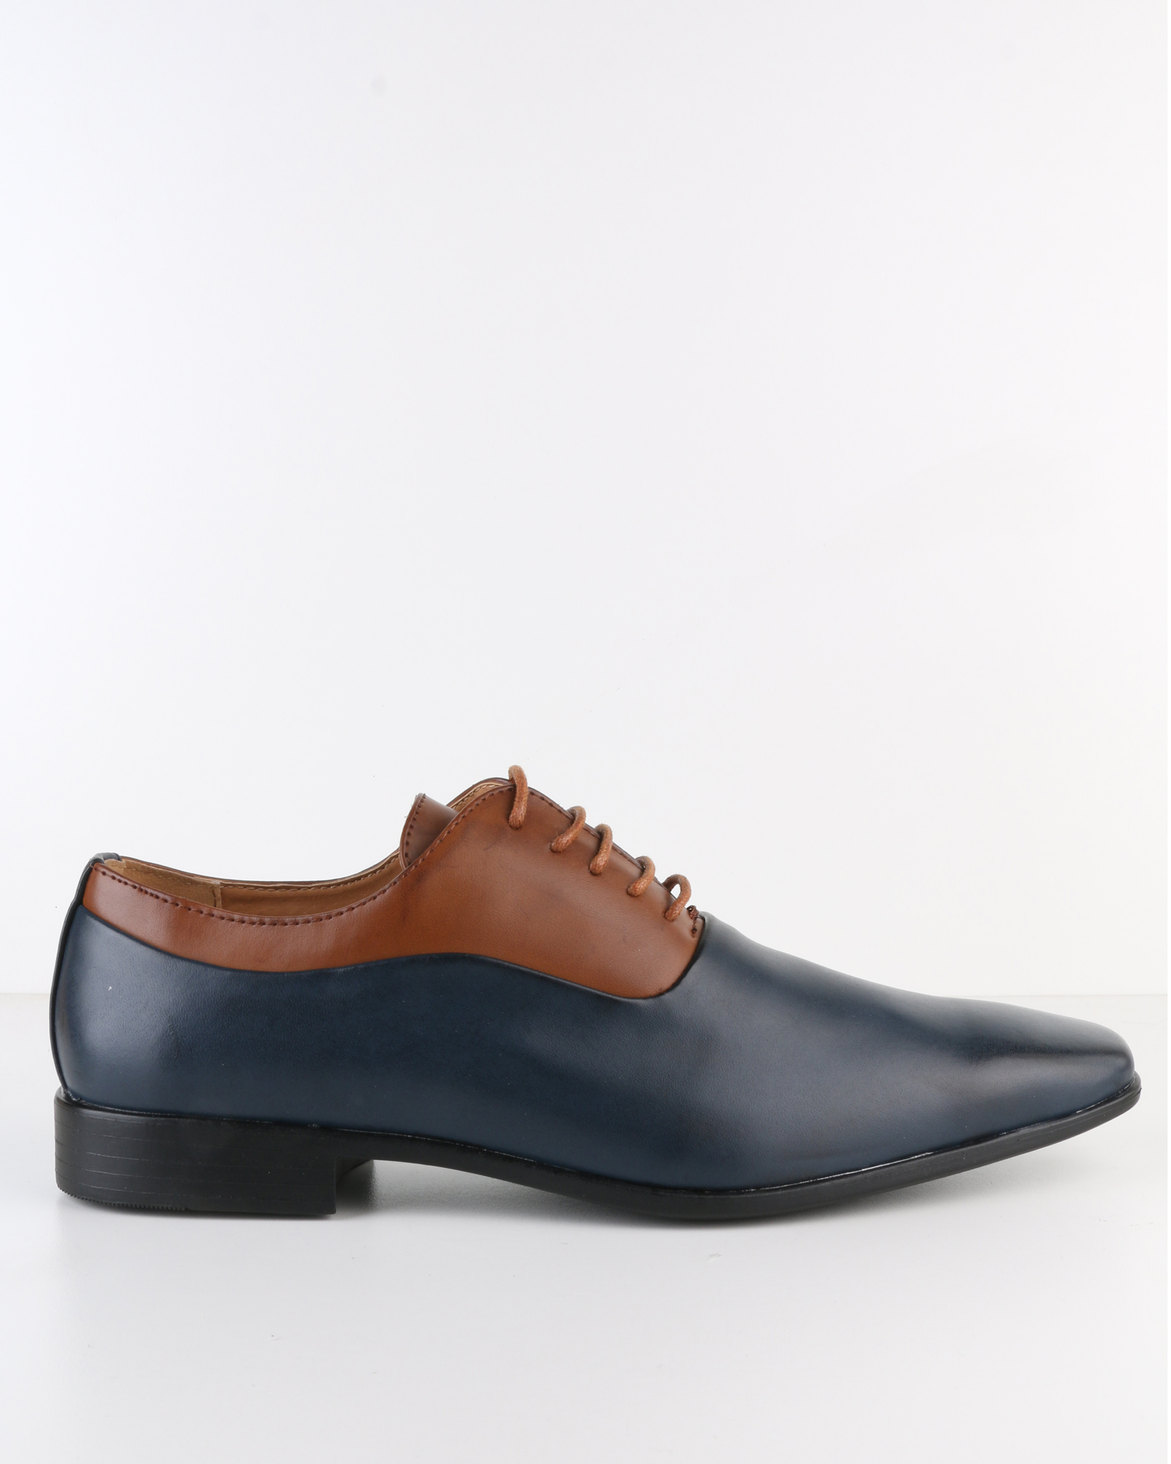 Paul of London Formal Lace Up Shoe Navy/Tan | Zando